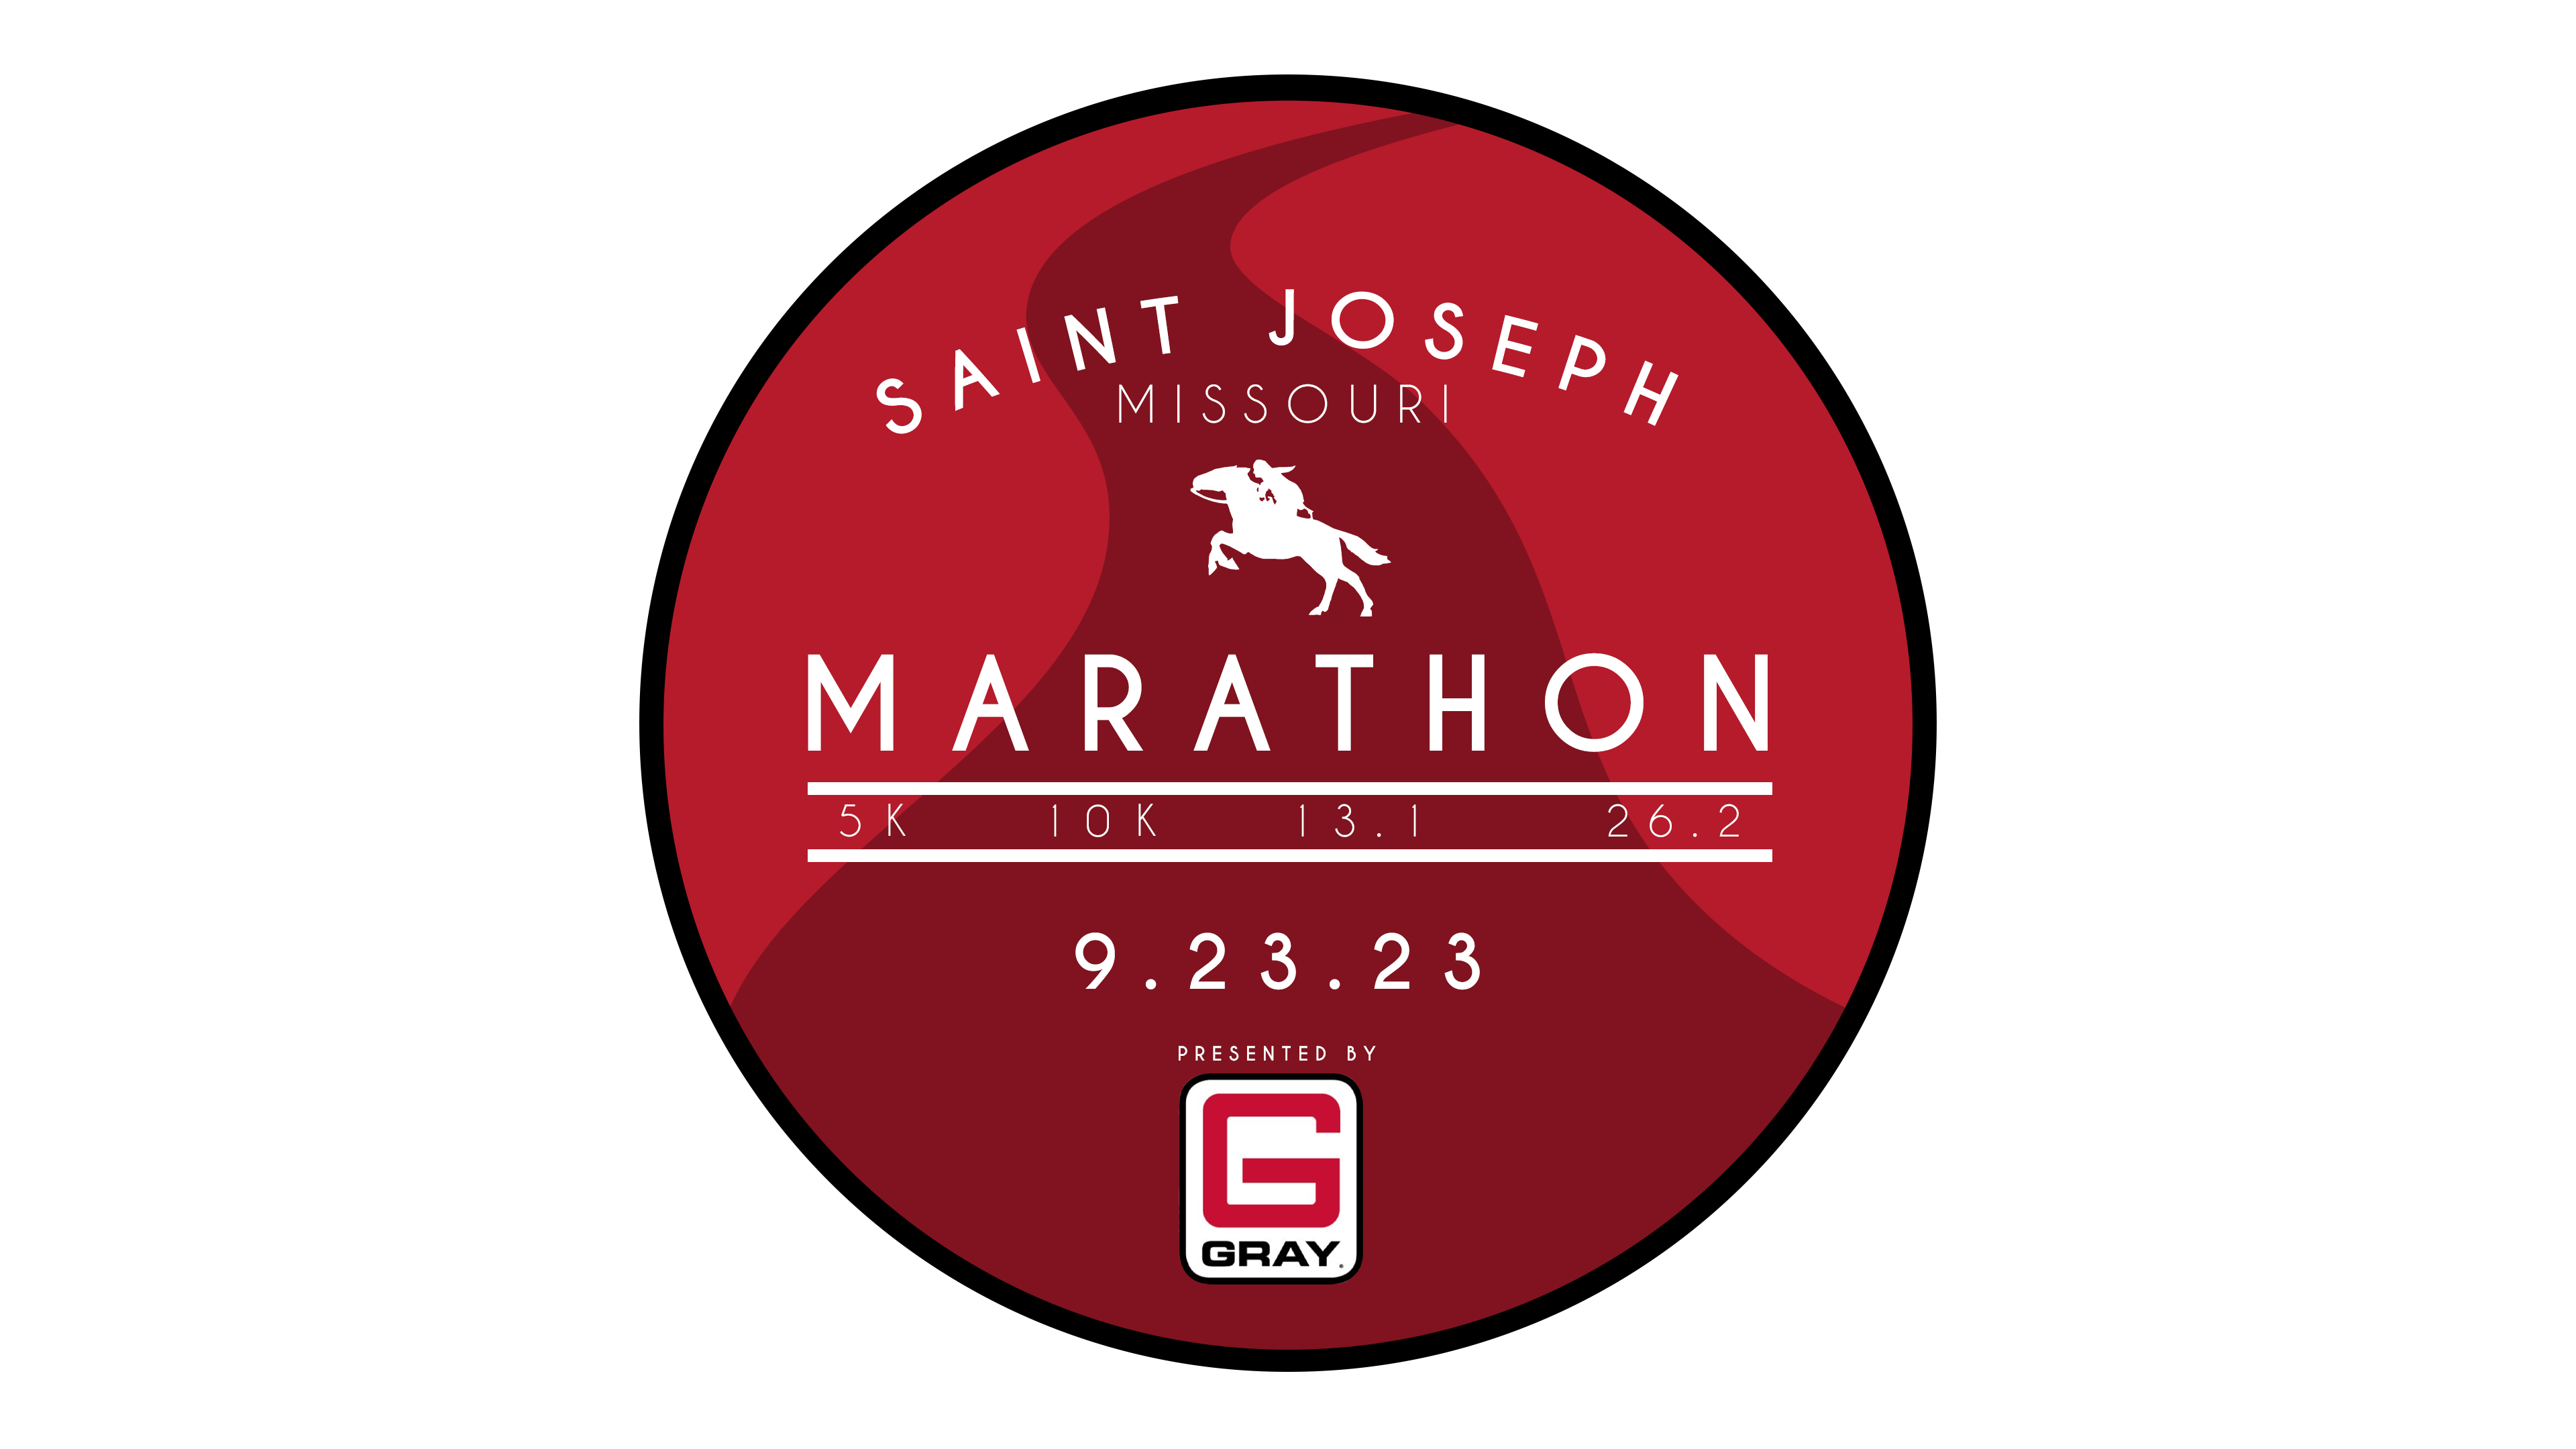 St. Joseph Marathon